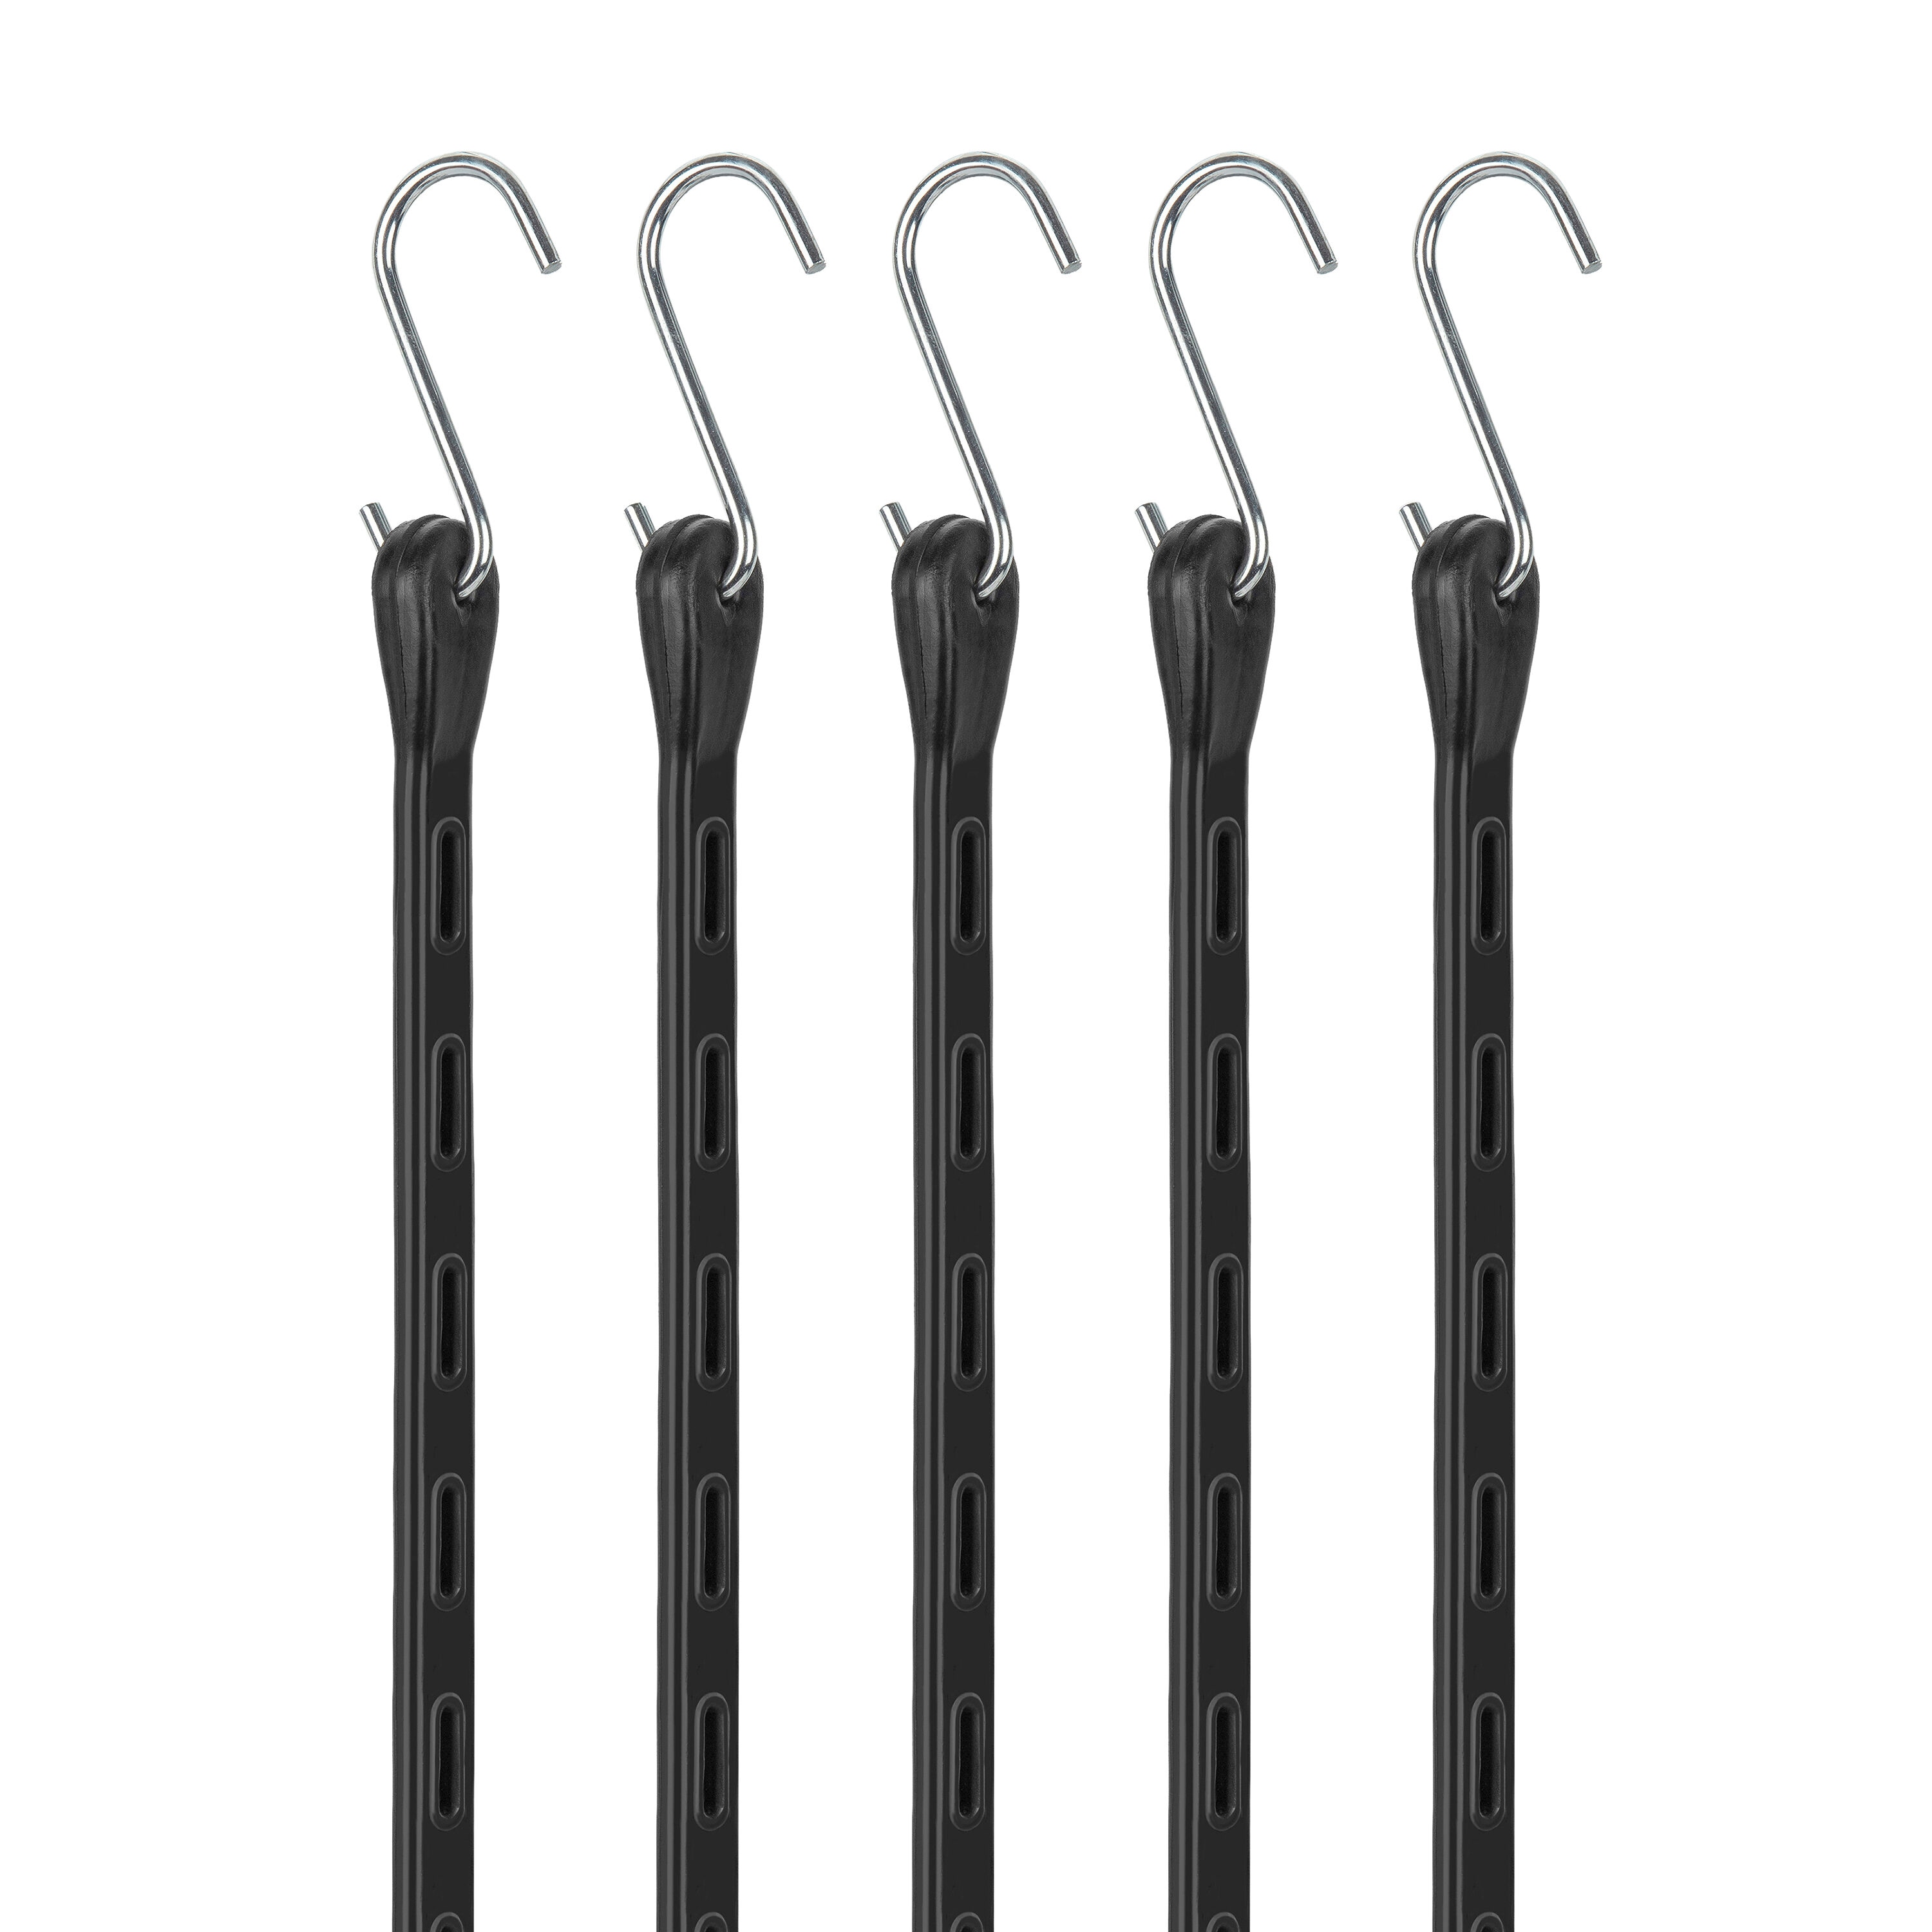 24” Adjustable Length Tarp Strap with S Hooks